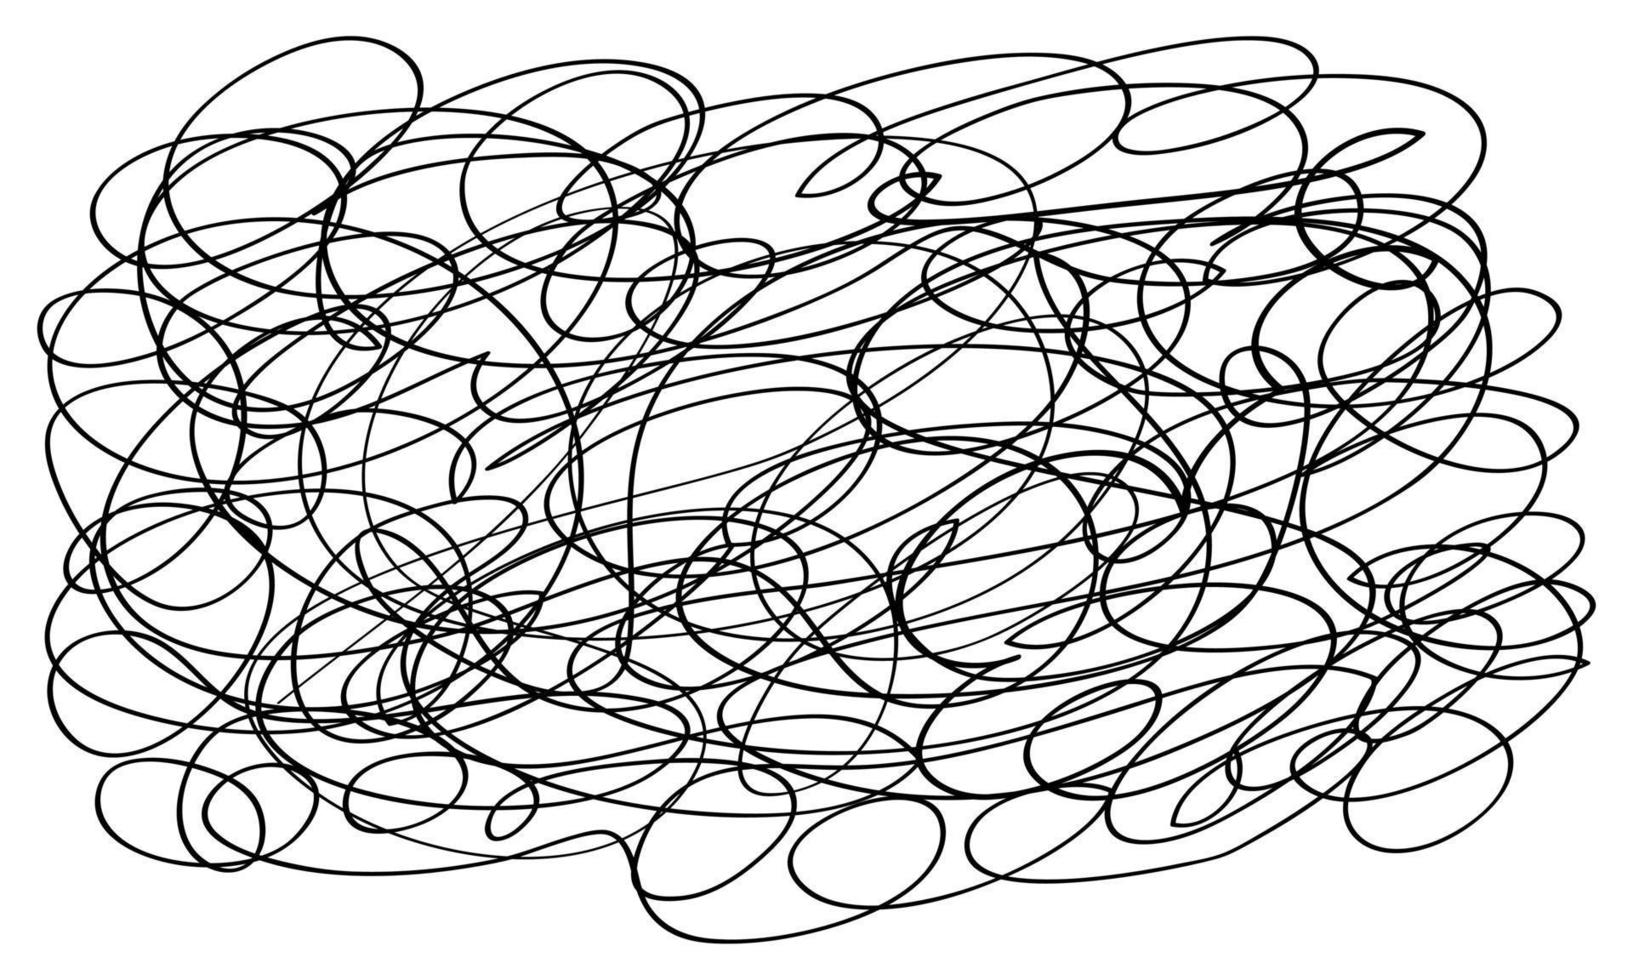 hand gezeichnetes abstraktes kritzelgekritzel vektor